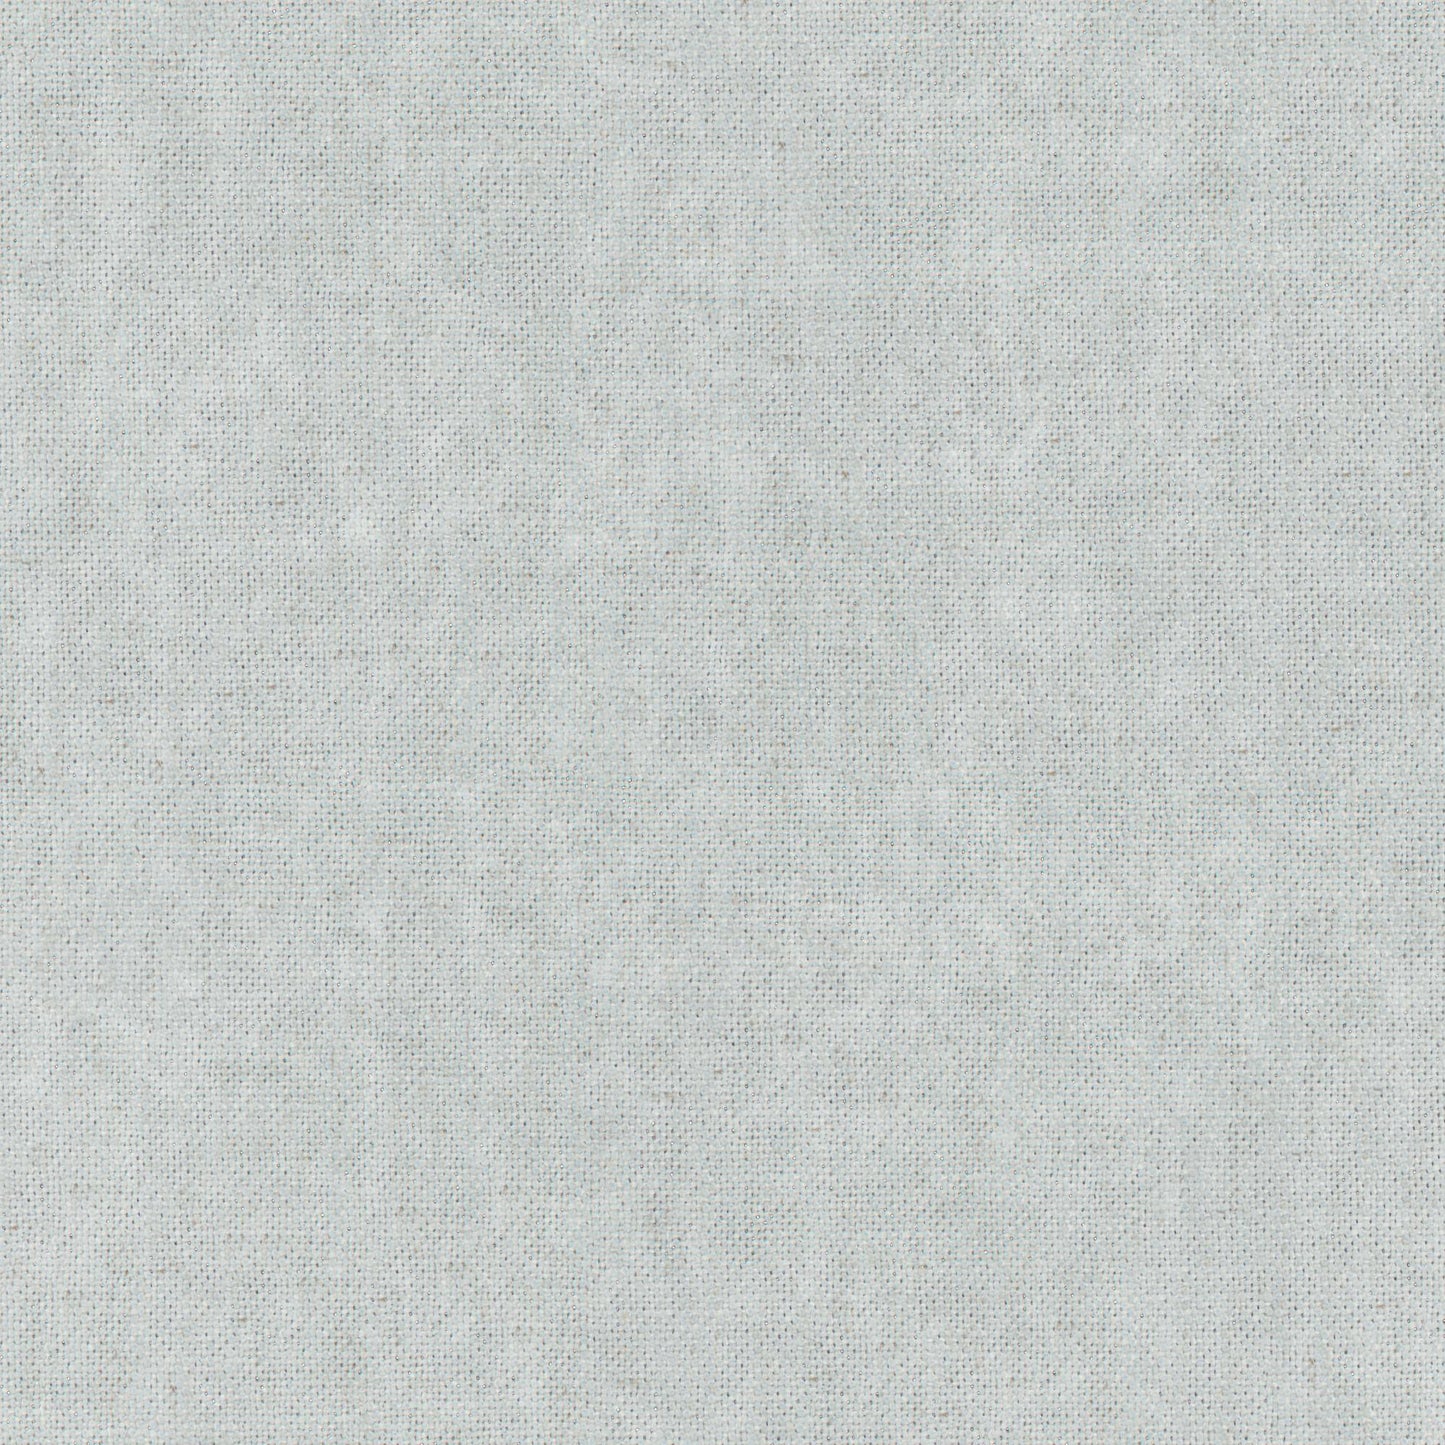 Home Fabrics - FibreGuard - Monterey - 23-Dove - Fabric per Meter